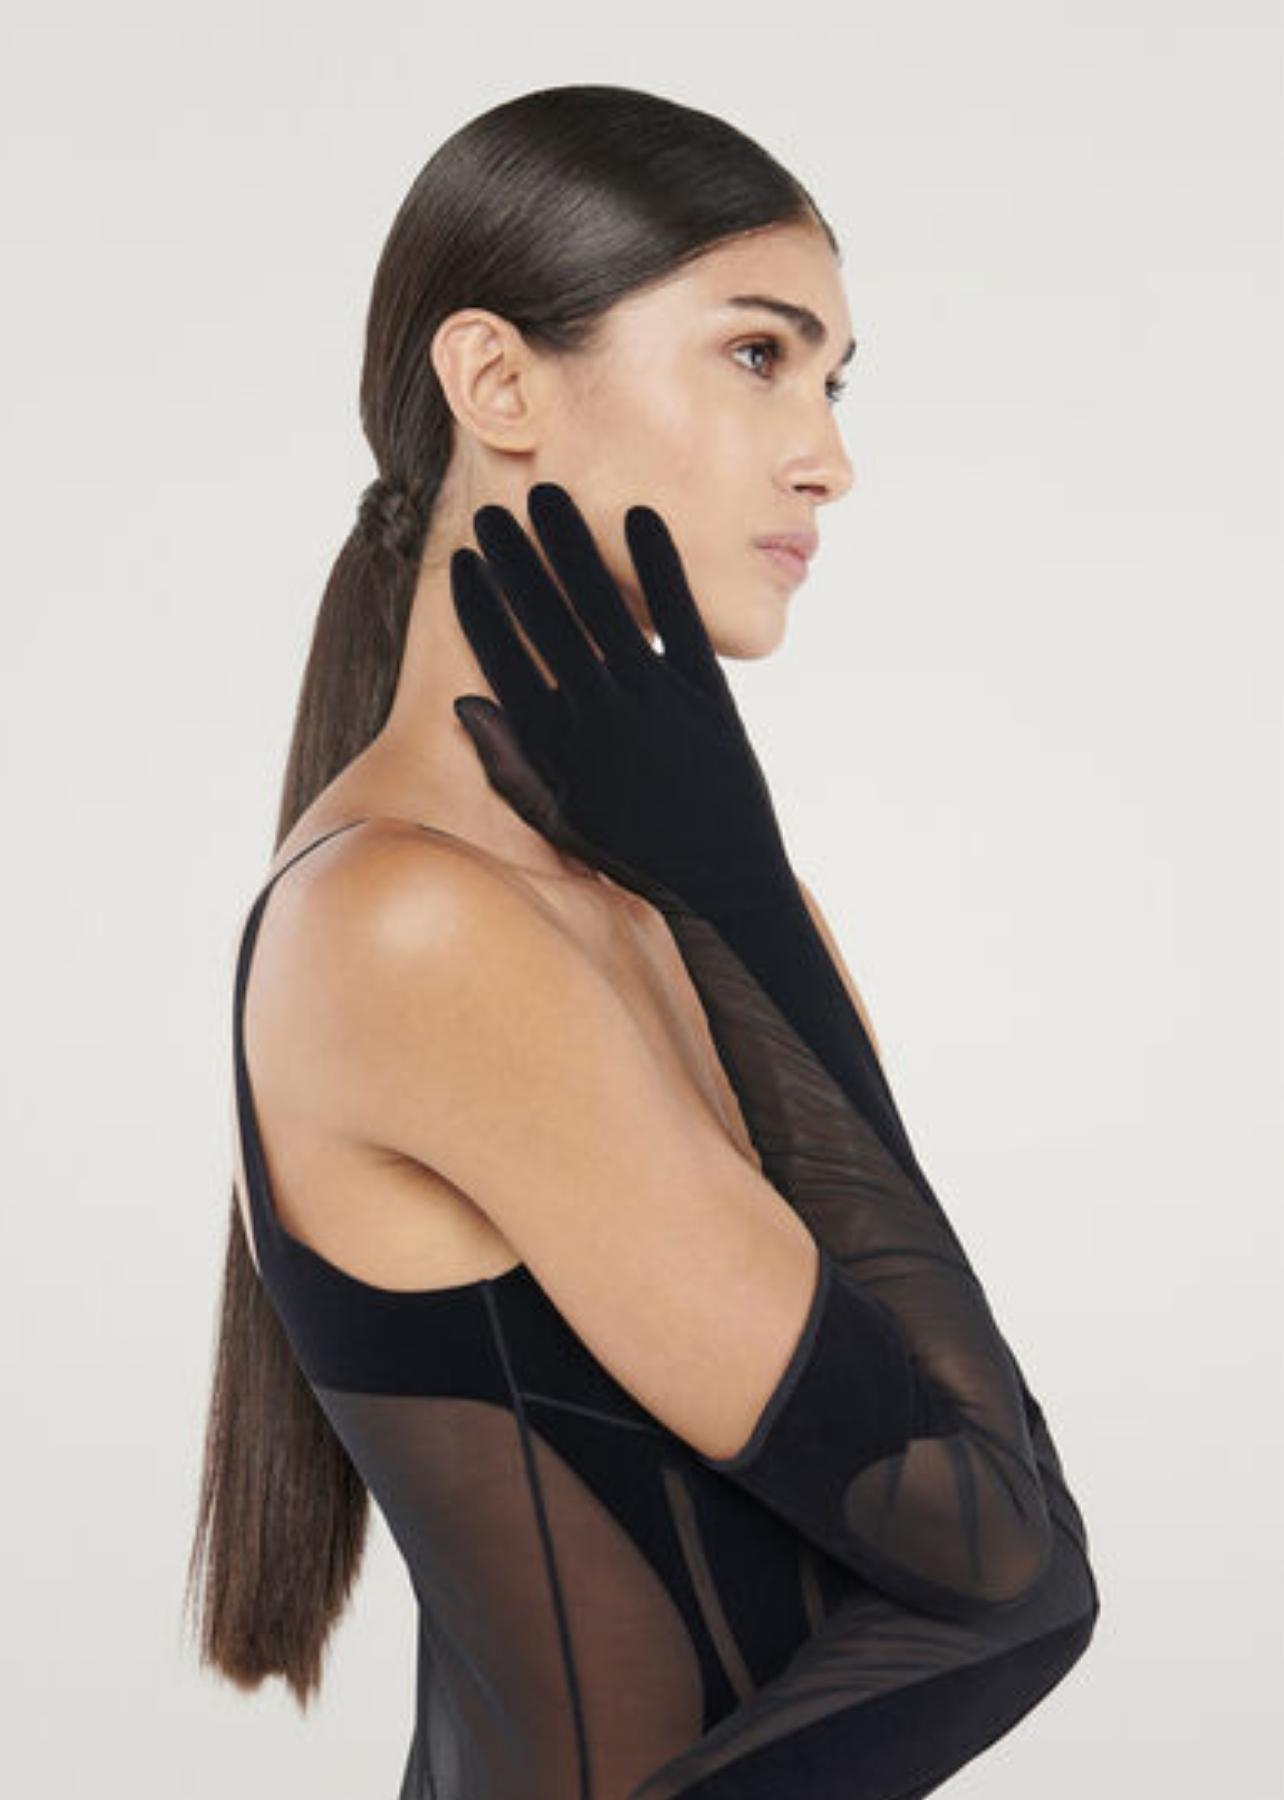 Model wearing long, black Mugler by Wolford gloves